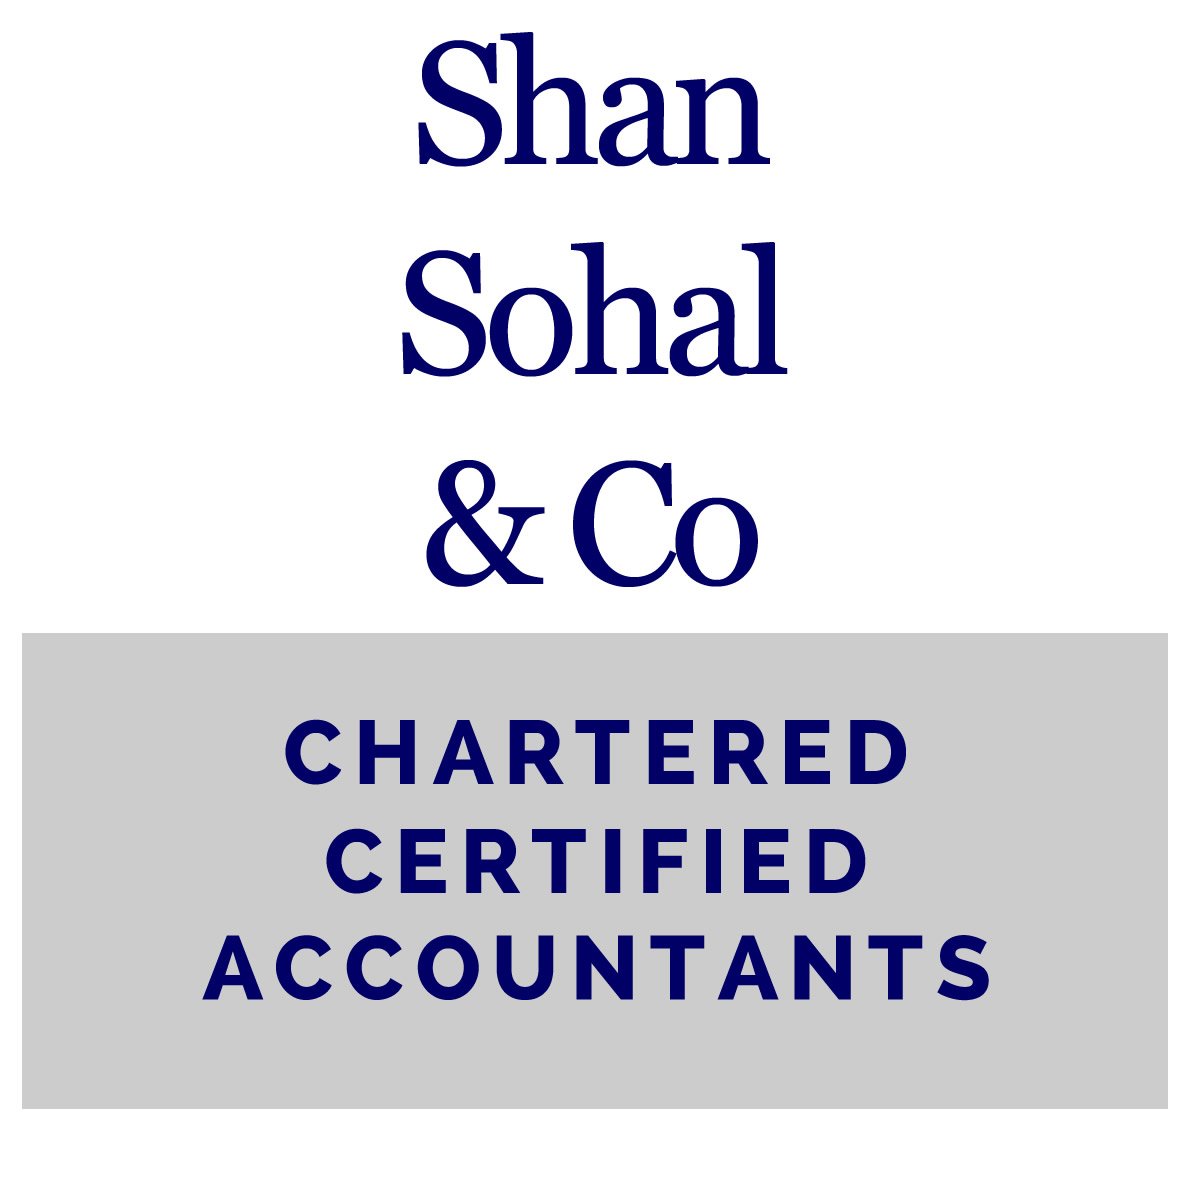 Shan Sohal Chartered Accounts. Chartered Accountants in Surbiton, Surrey